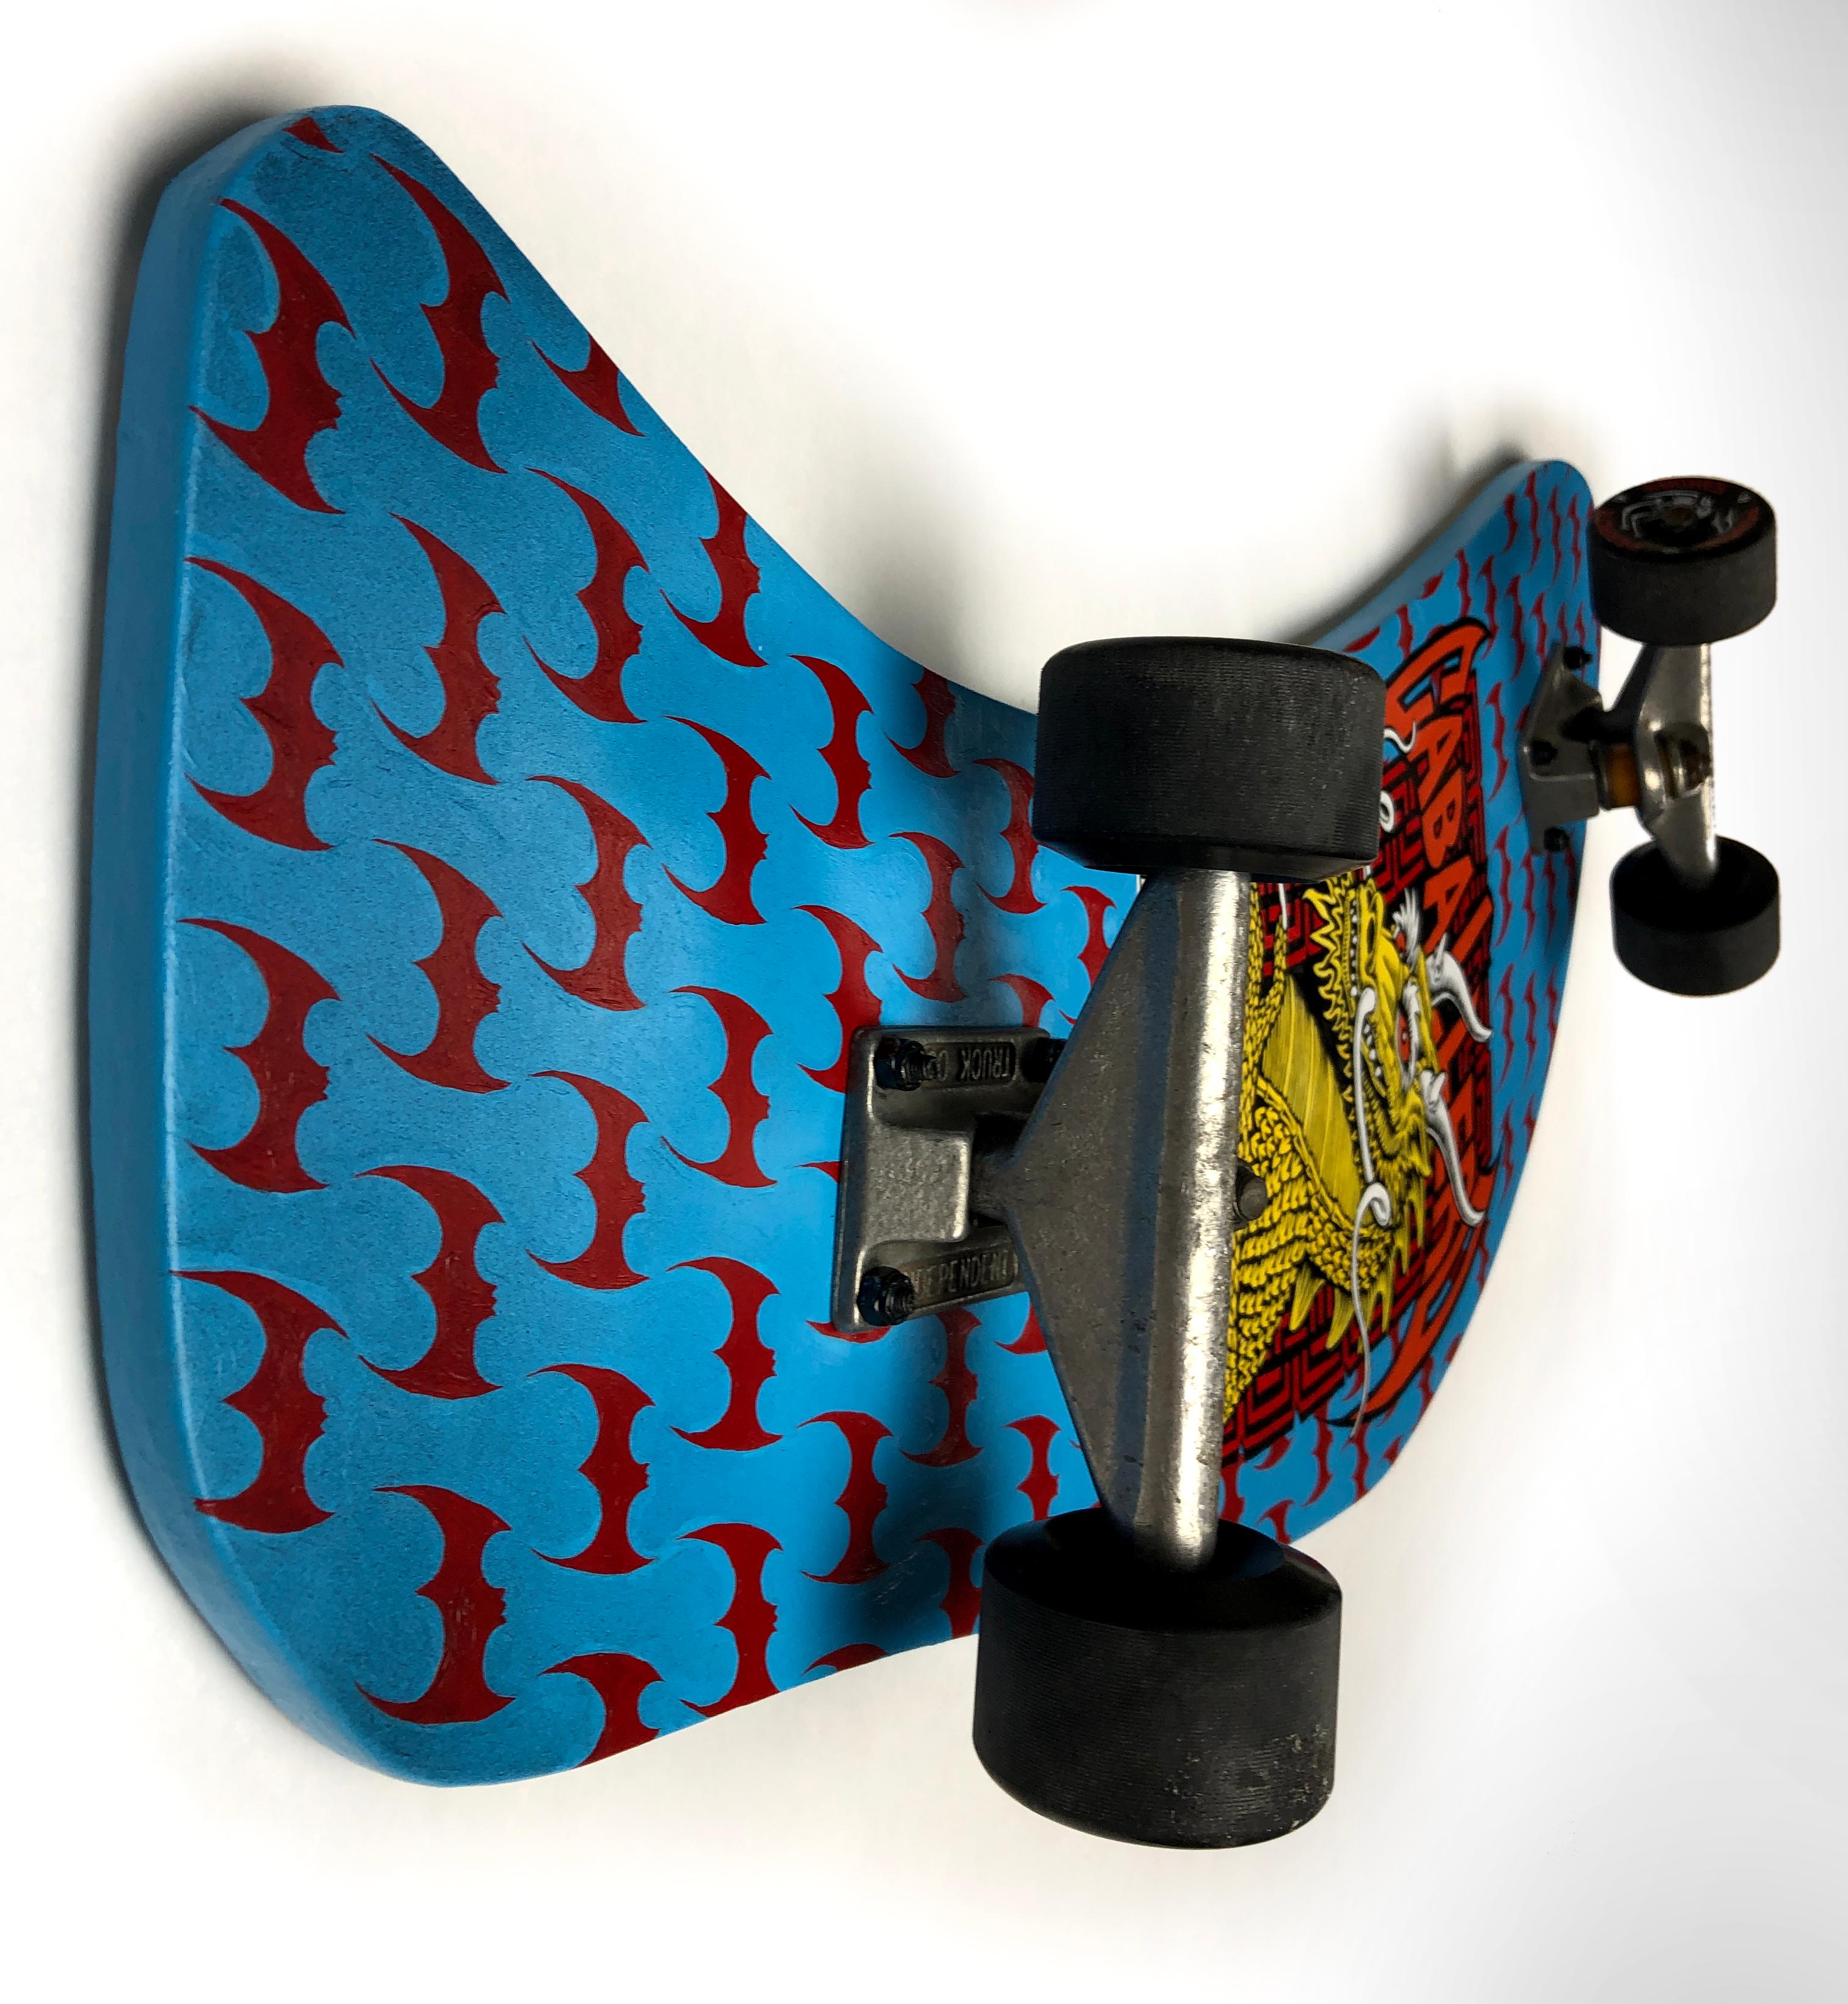 “Cab Dragon Melted Skateboard” 2